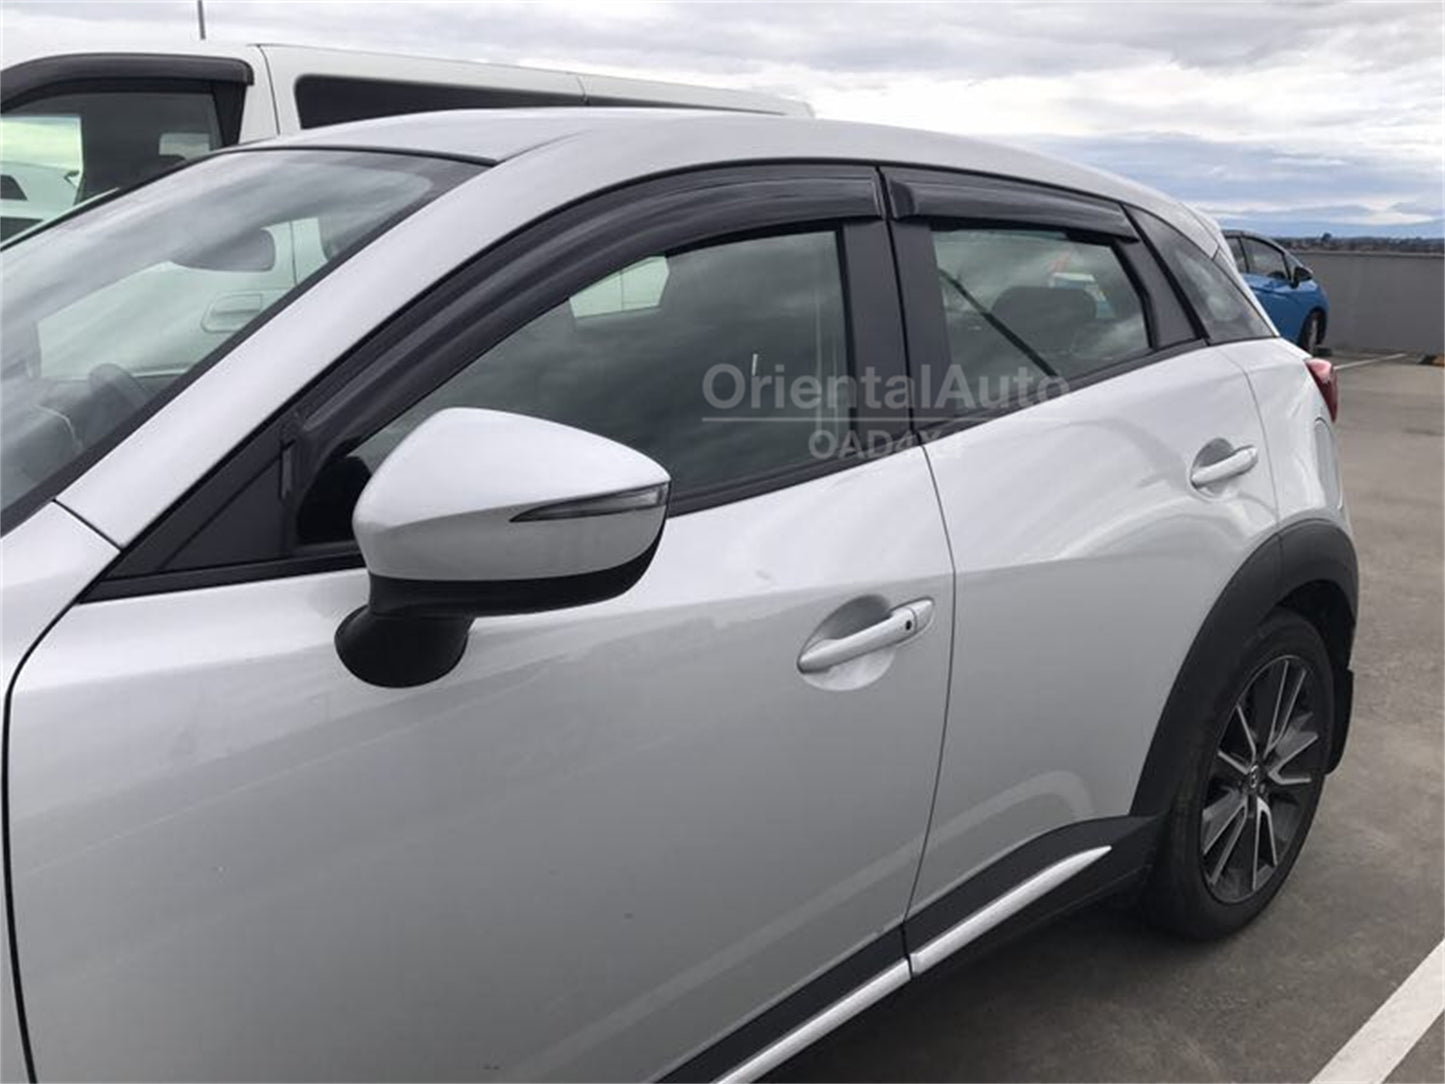 Luxury Weather Shields for Mazda CX3 2015+ Weathershields Window Visors